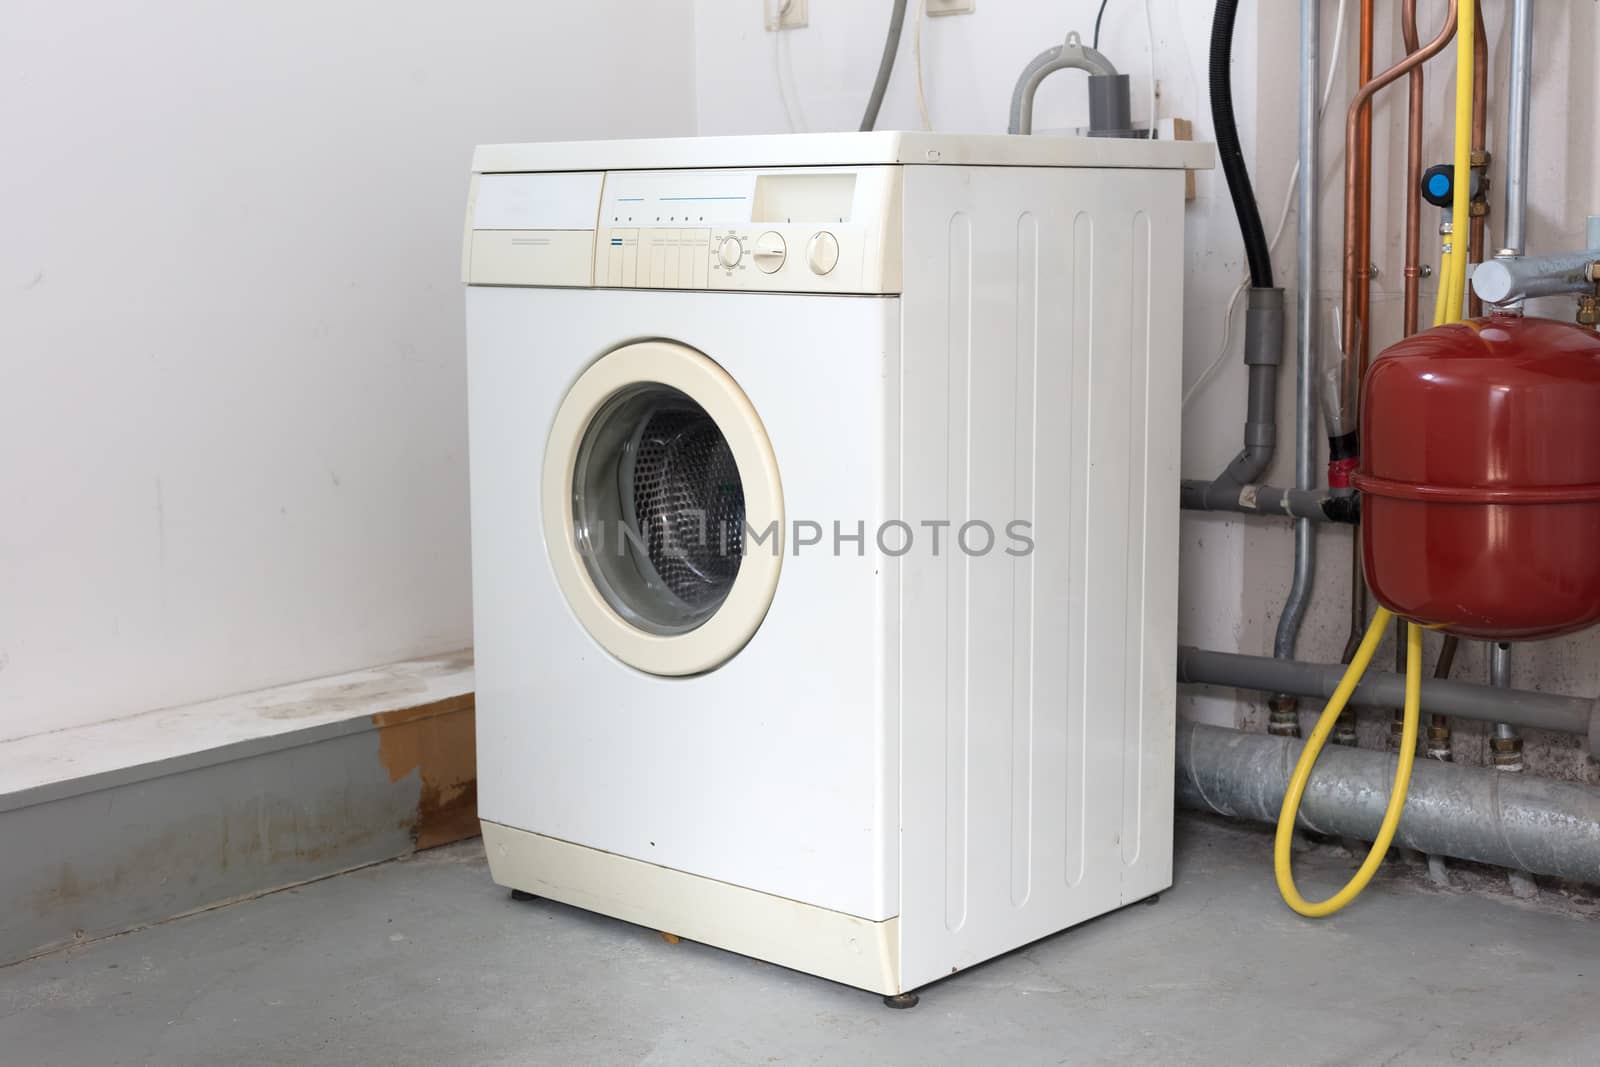 Old dirty washing machine by michaklootwijk